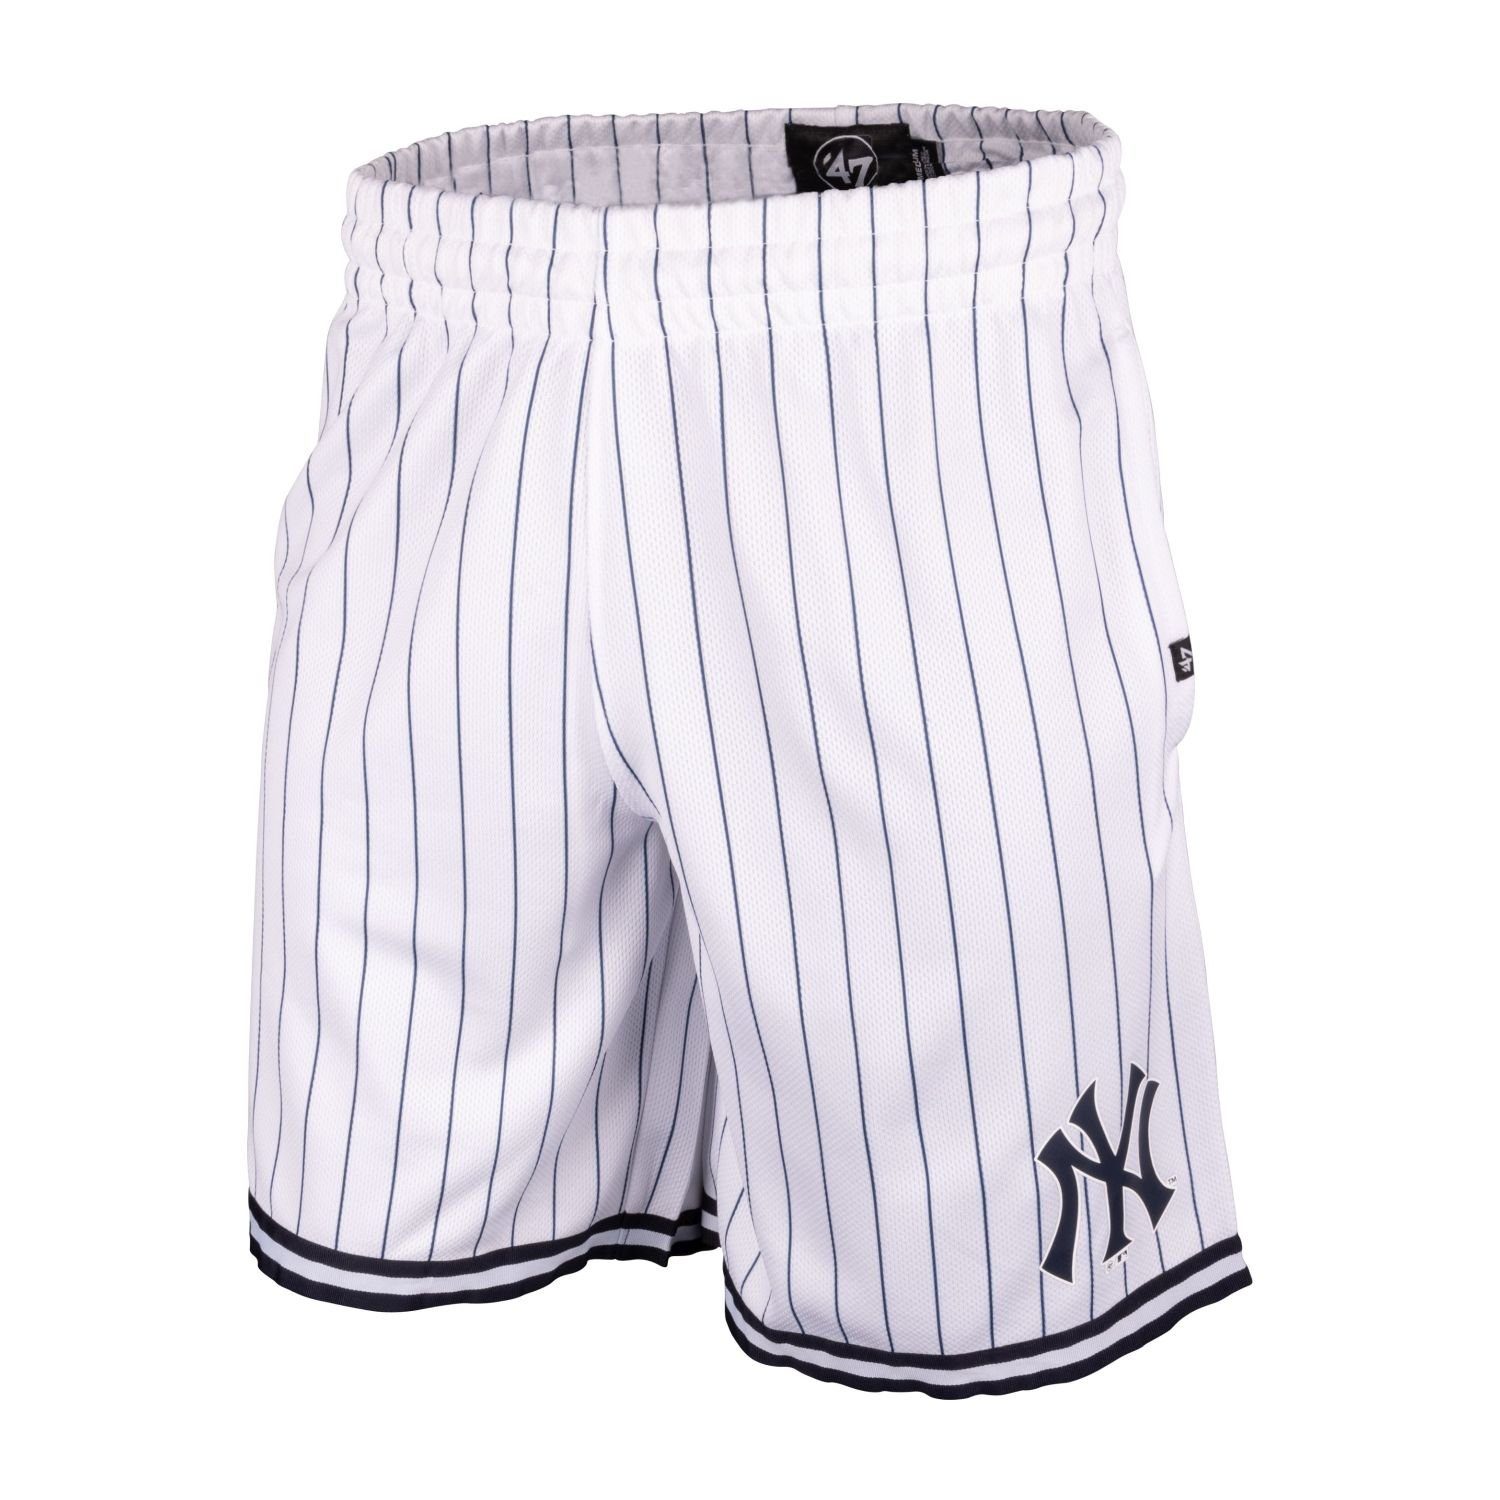 x27;47 Brand Shorts MLB PINSTRIPE Yankees York New